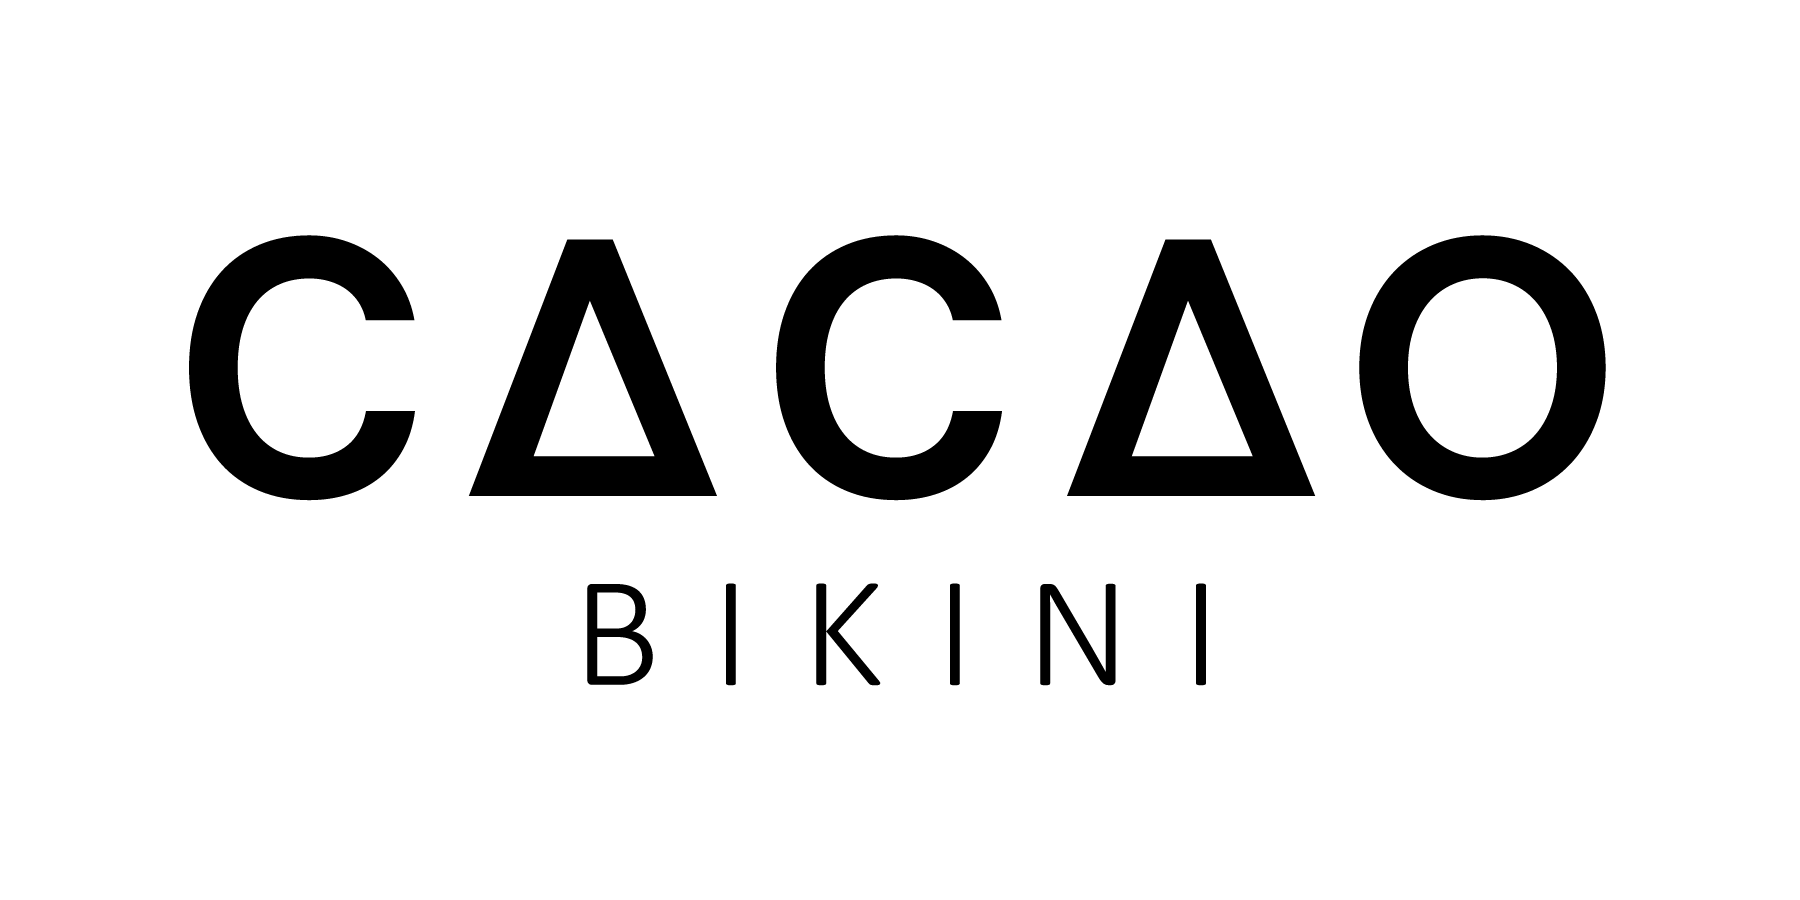 CACAO Bikini